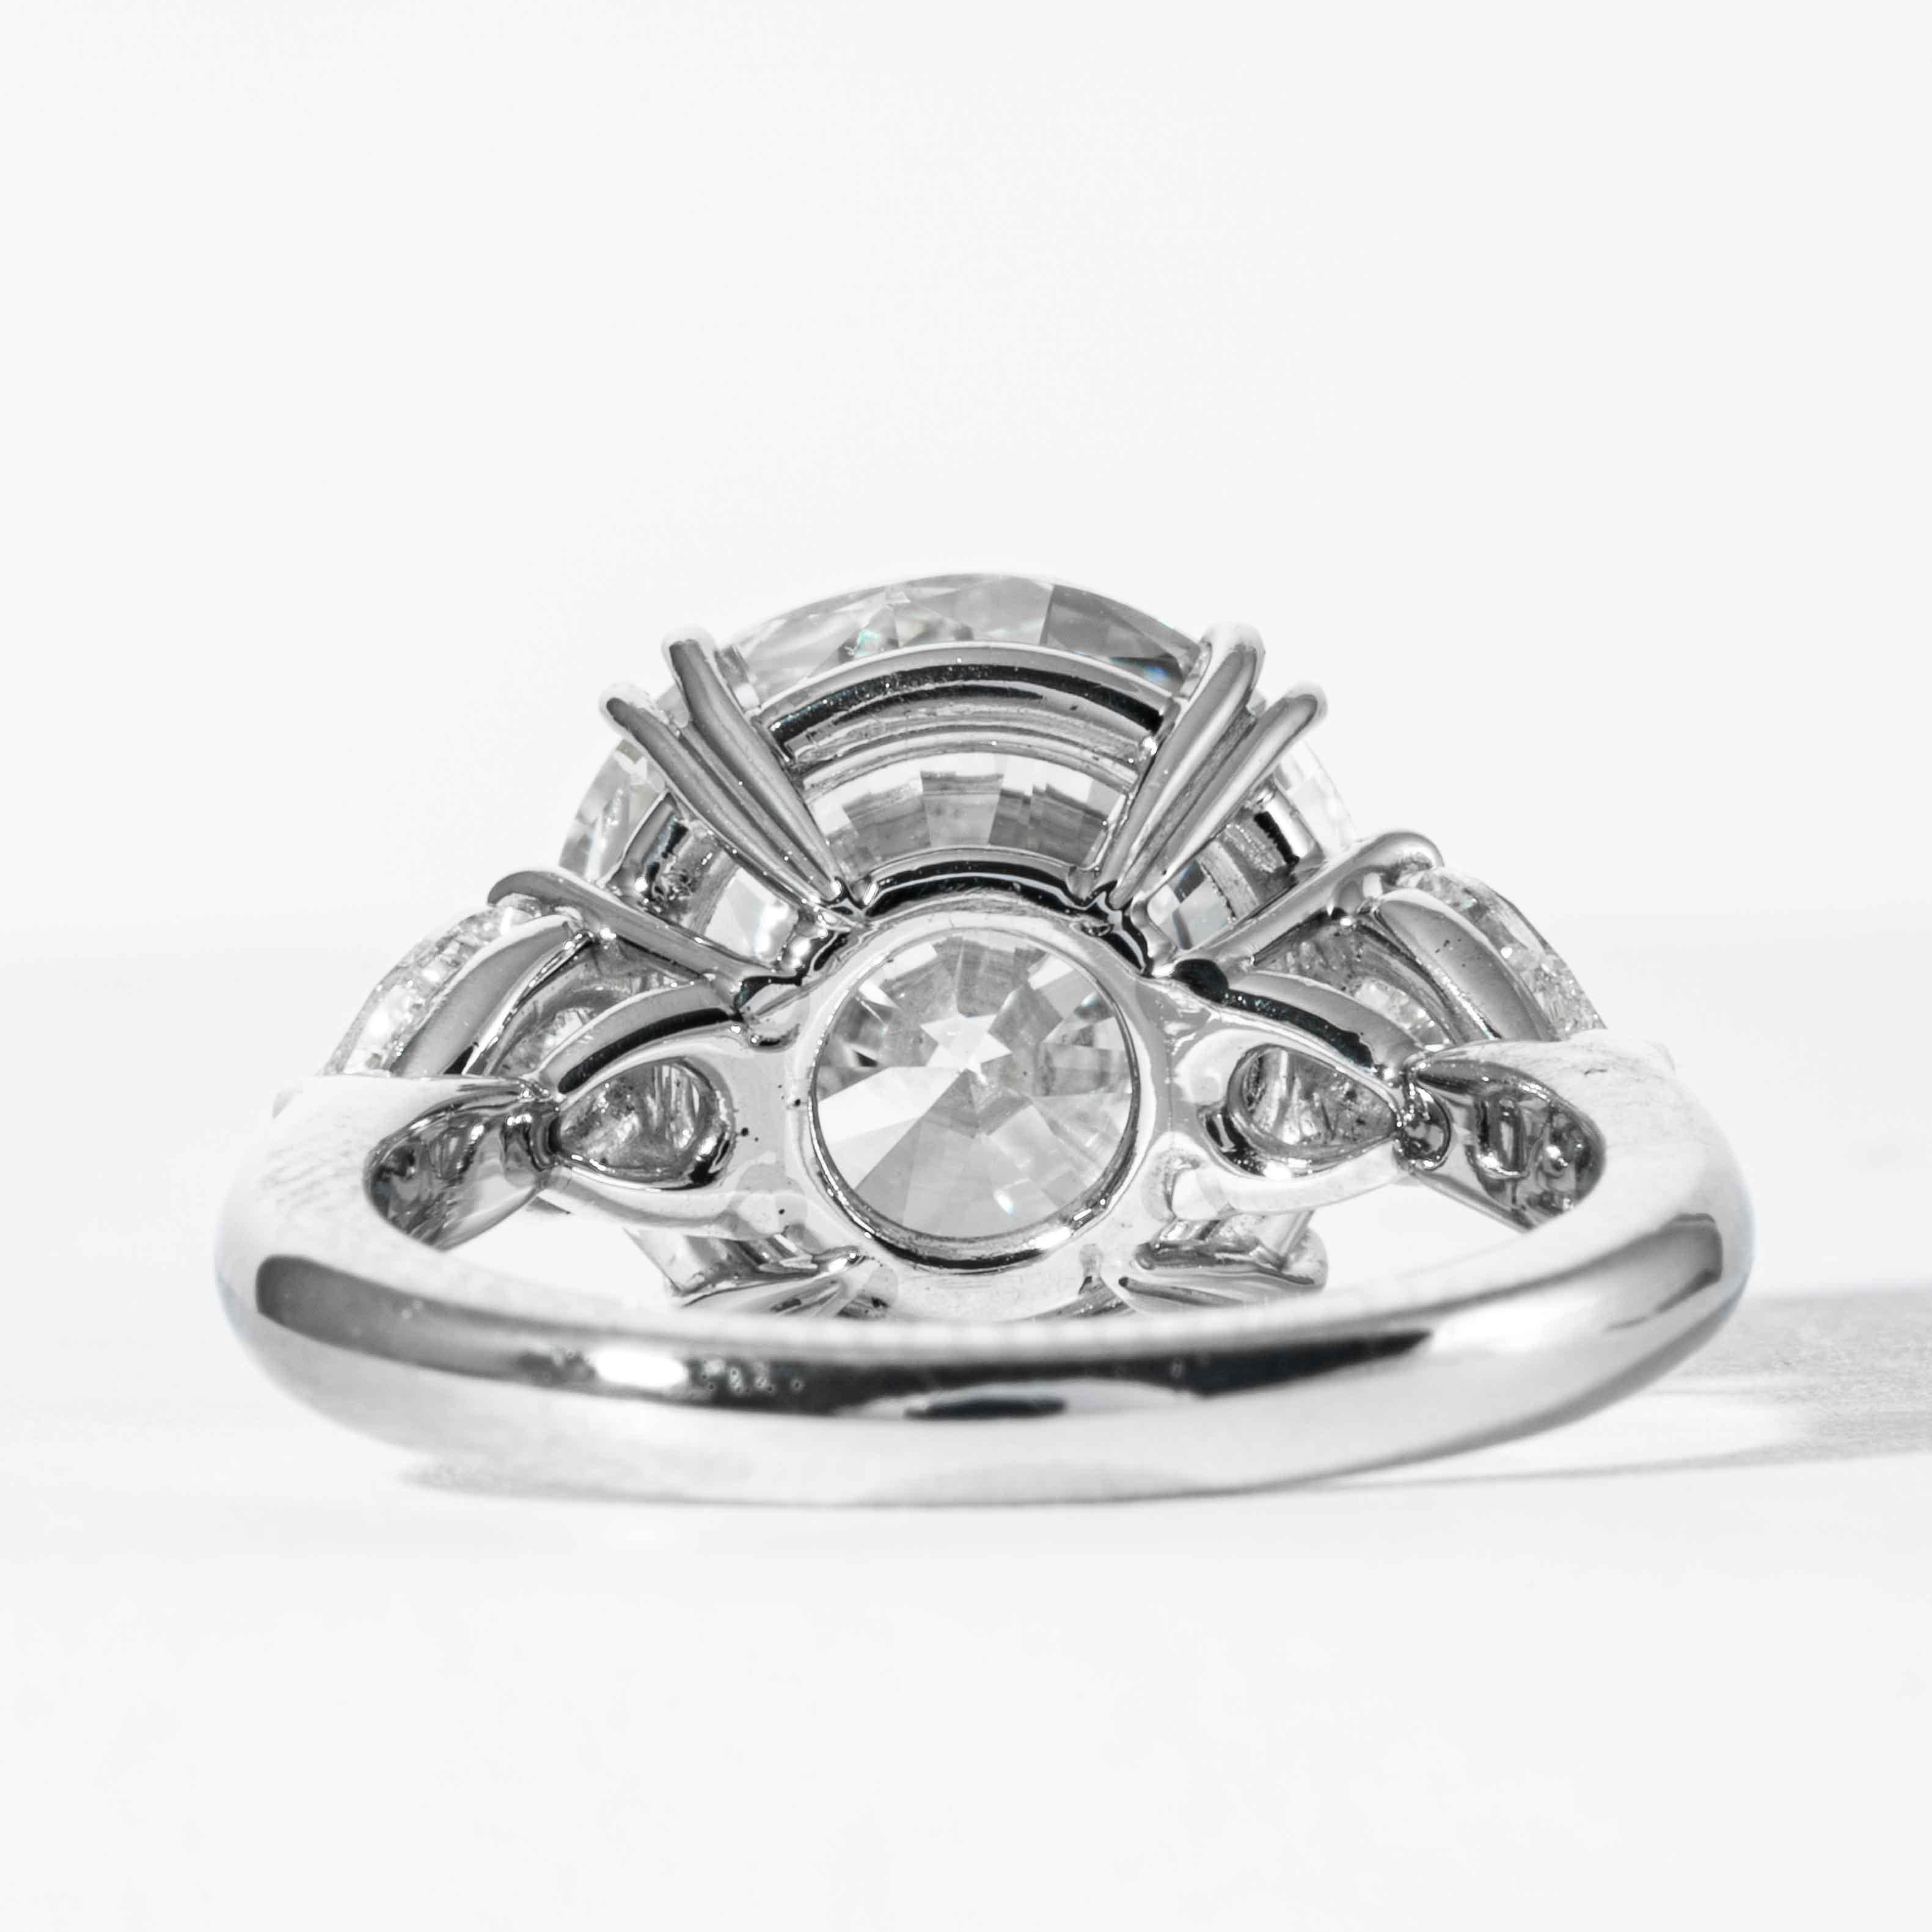 Women's Shreve, Crump & Low GIA Certified 5.90 Carat K VS2 Round Brilliant Diamond Ring For Sale